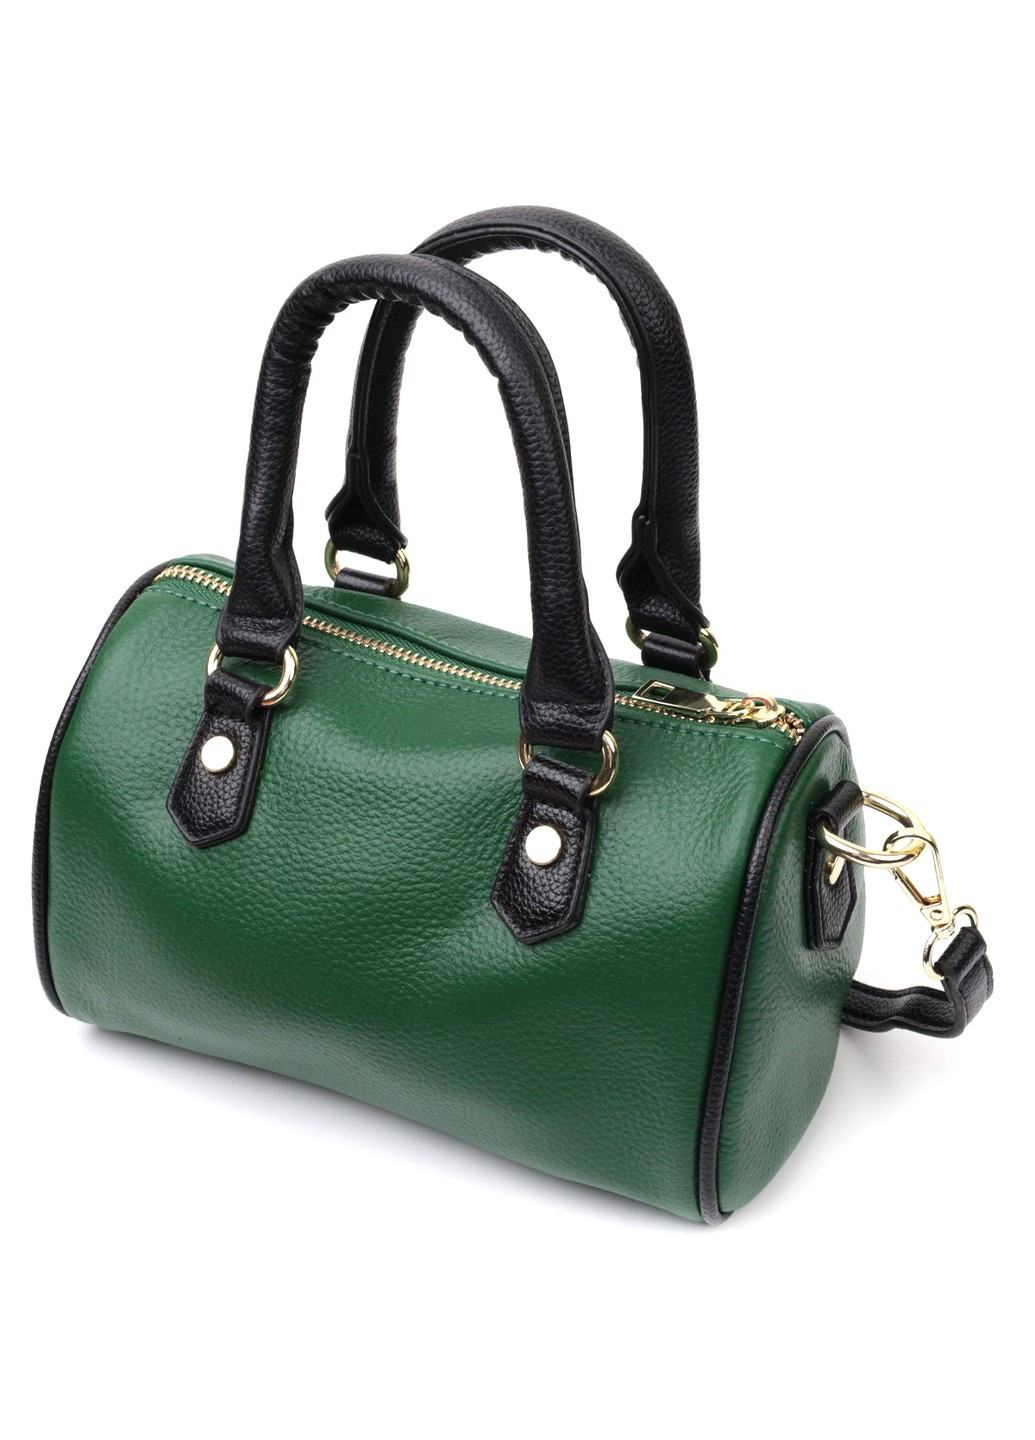 Кожаная сумка бочонок с темными акцентами 22351 Зеленая Vintage (276457634)